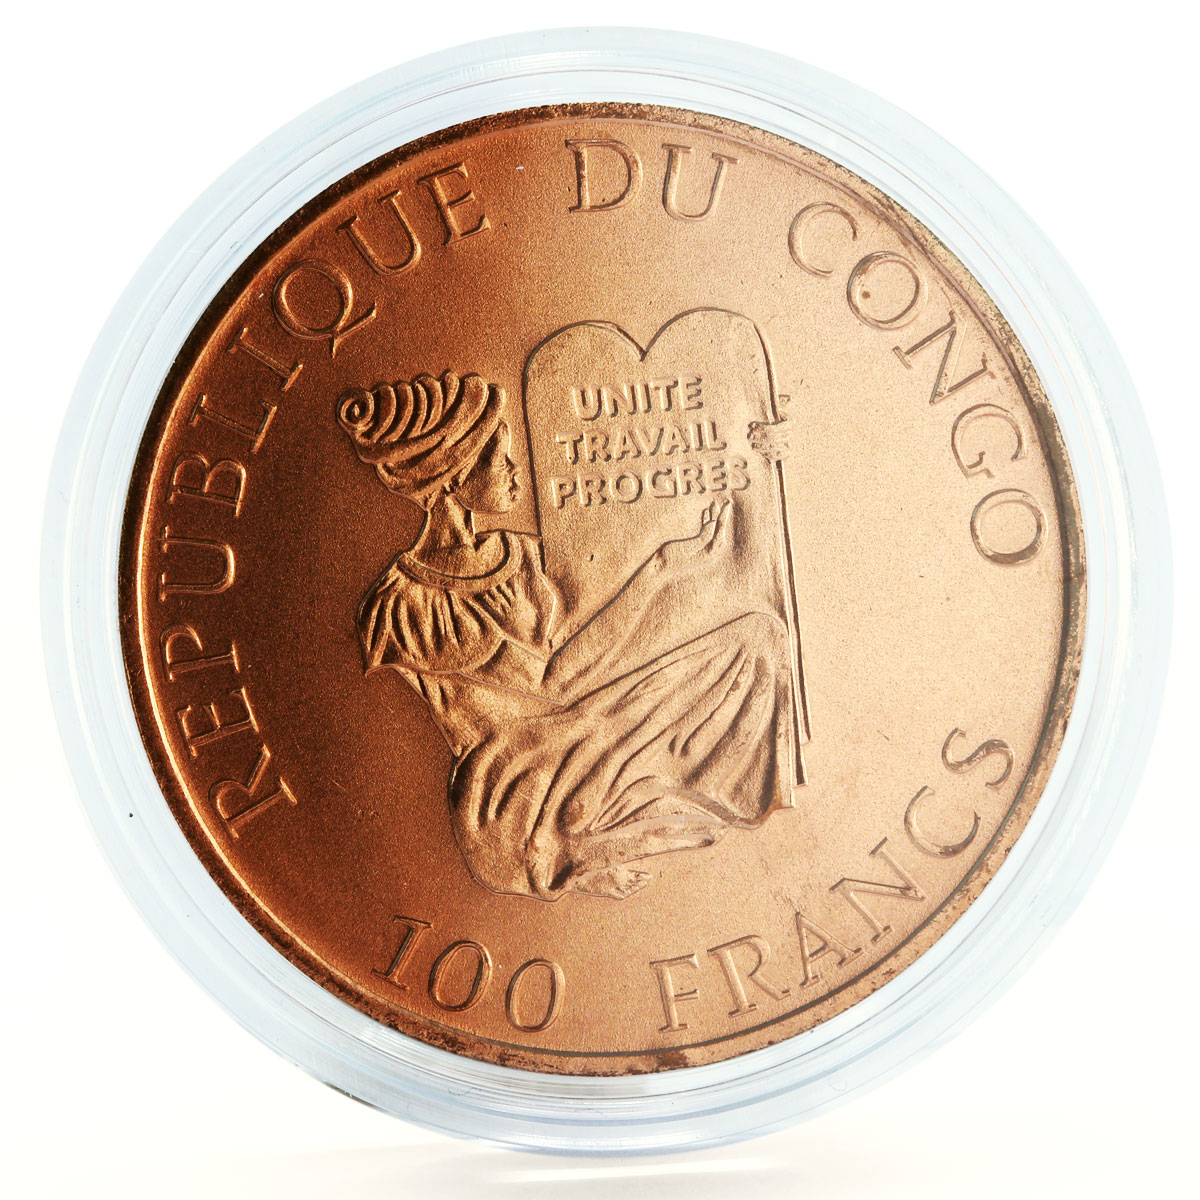 Congo 100 francs Endangered African Wildlife Elephants copper coin 1993